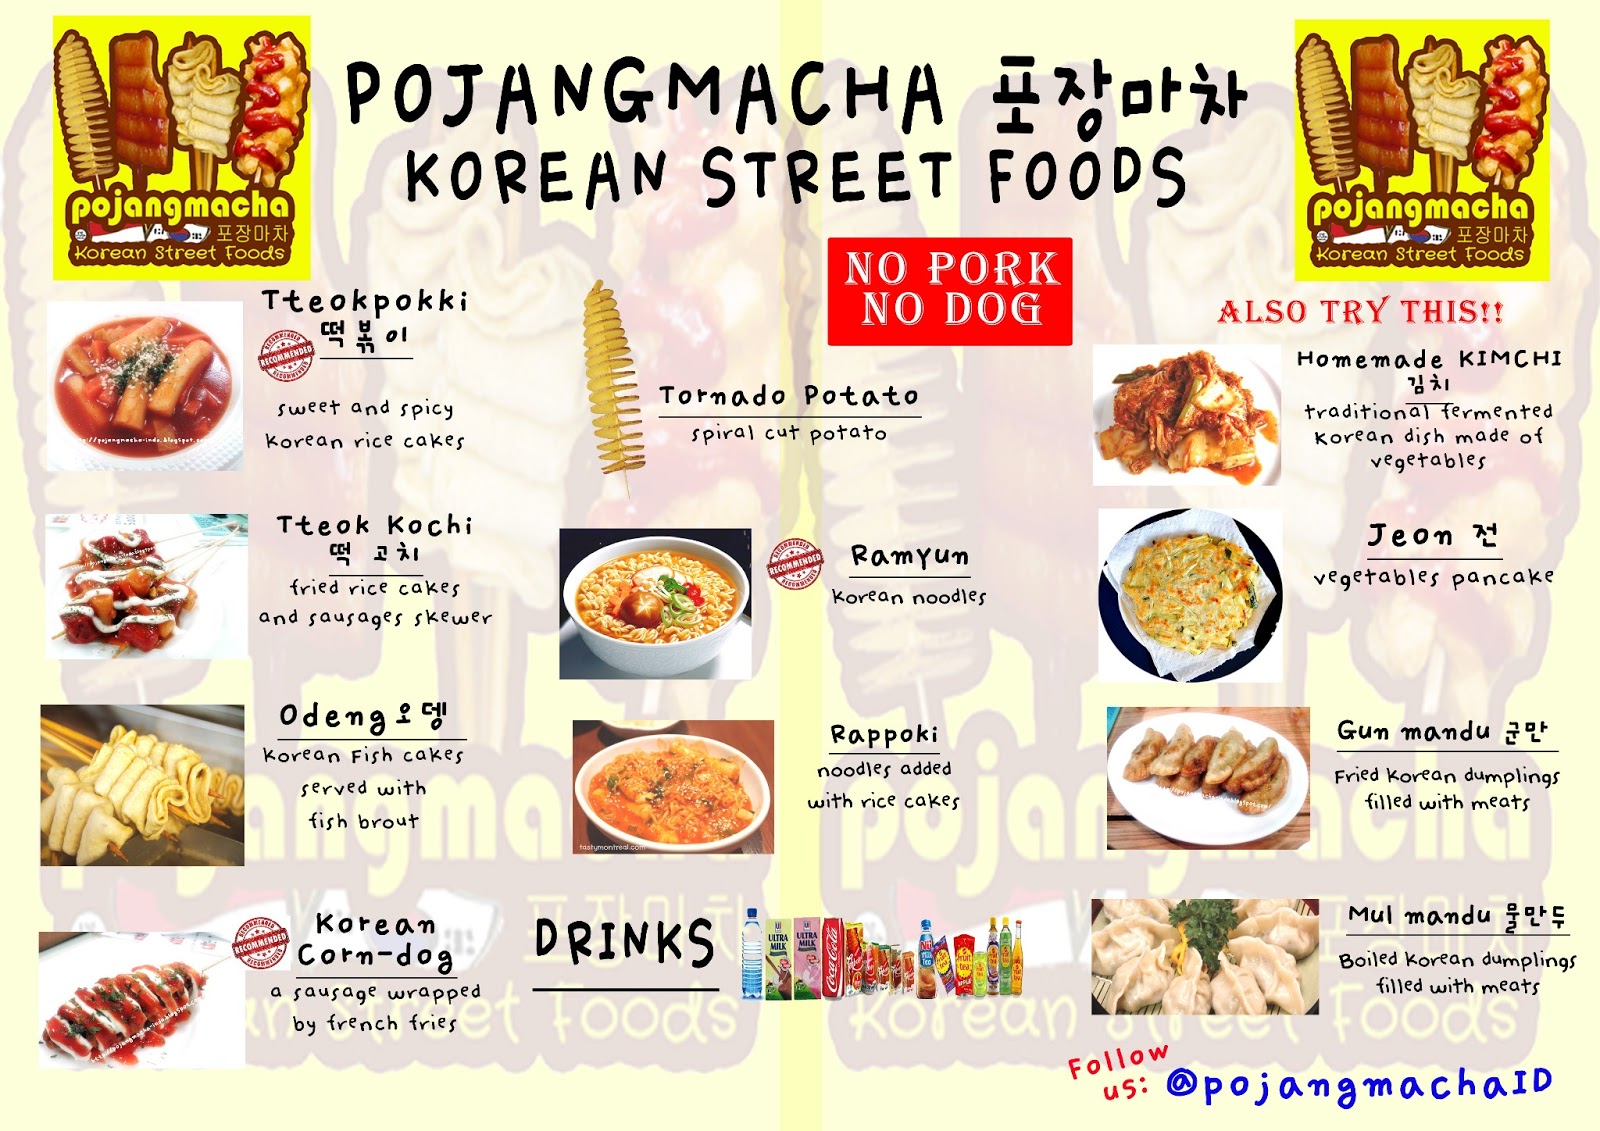 Pojangmacha - Korean Street Foods: our menu